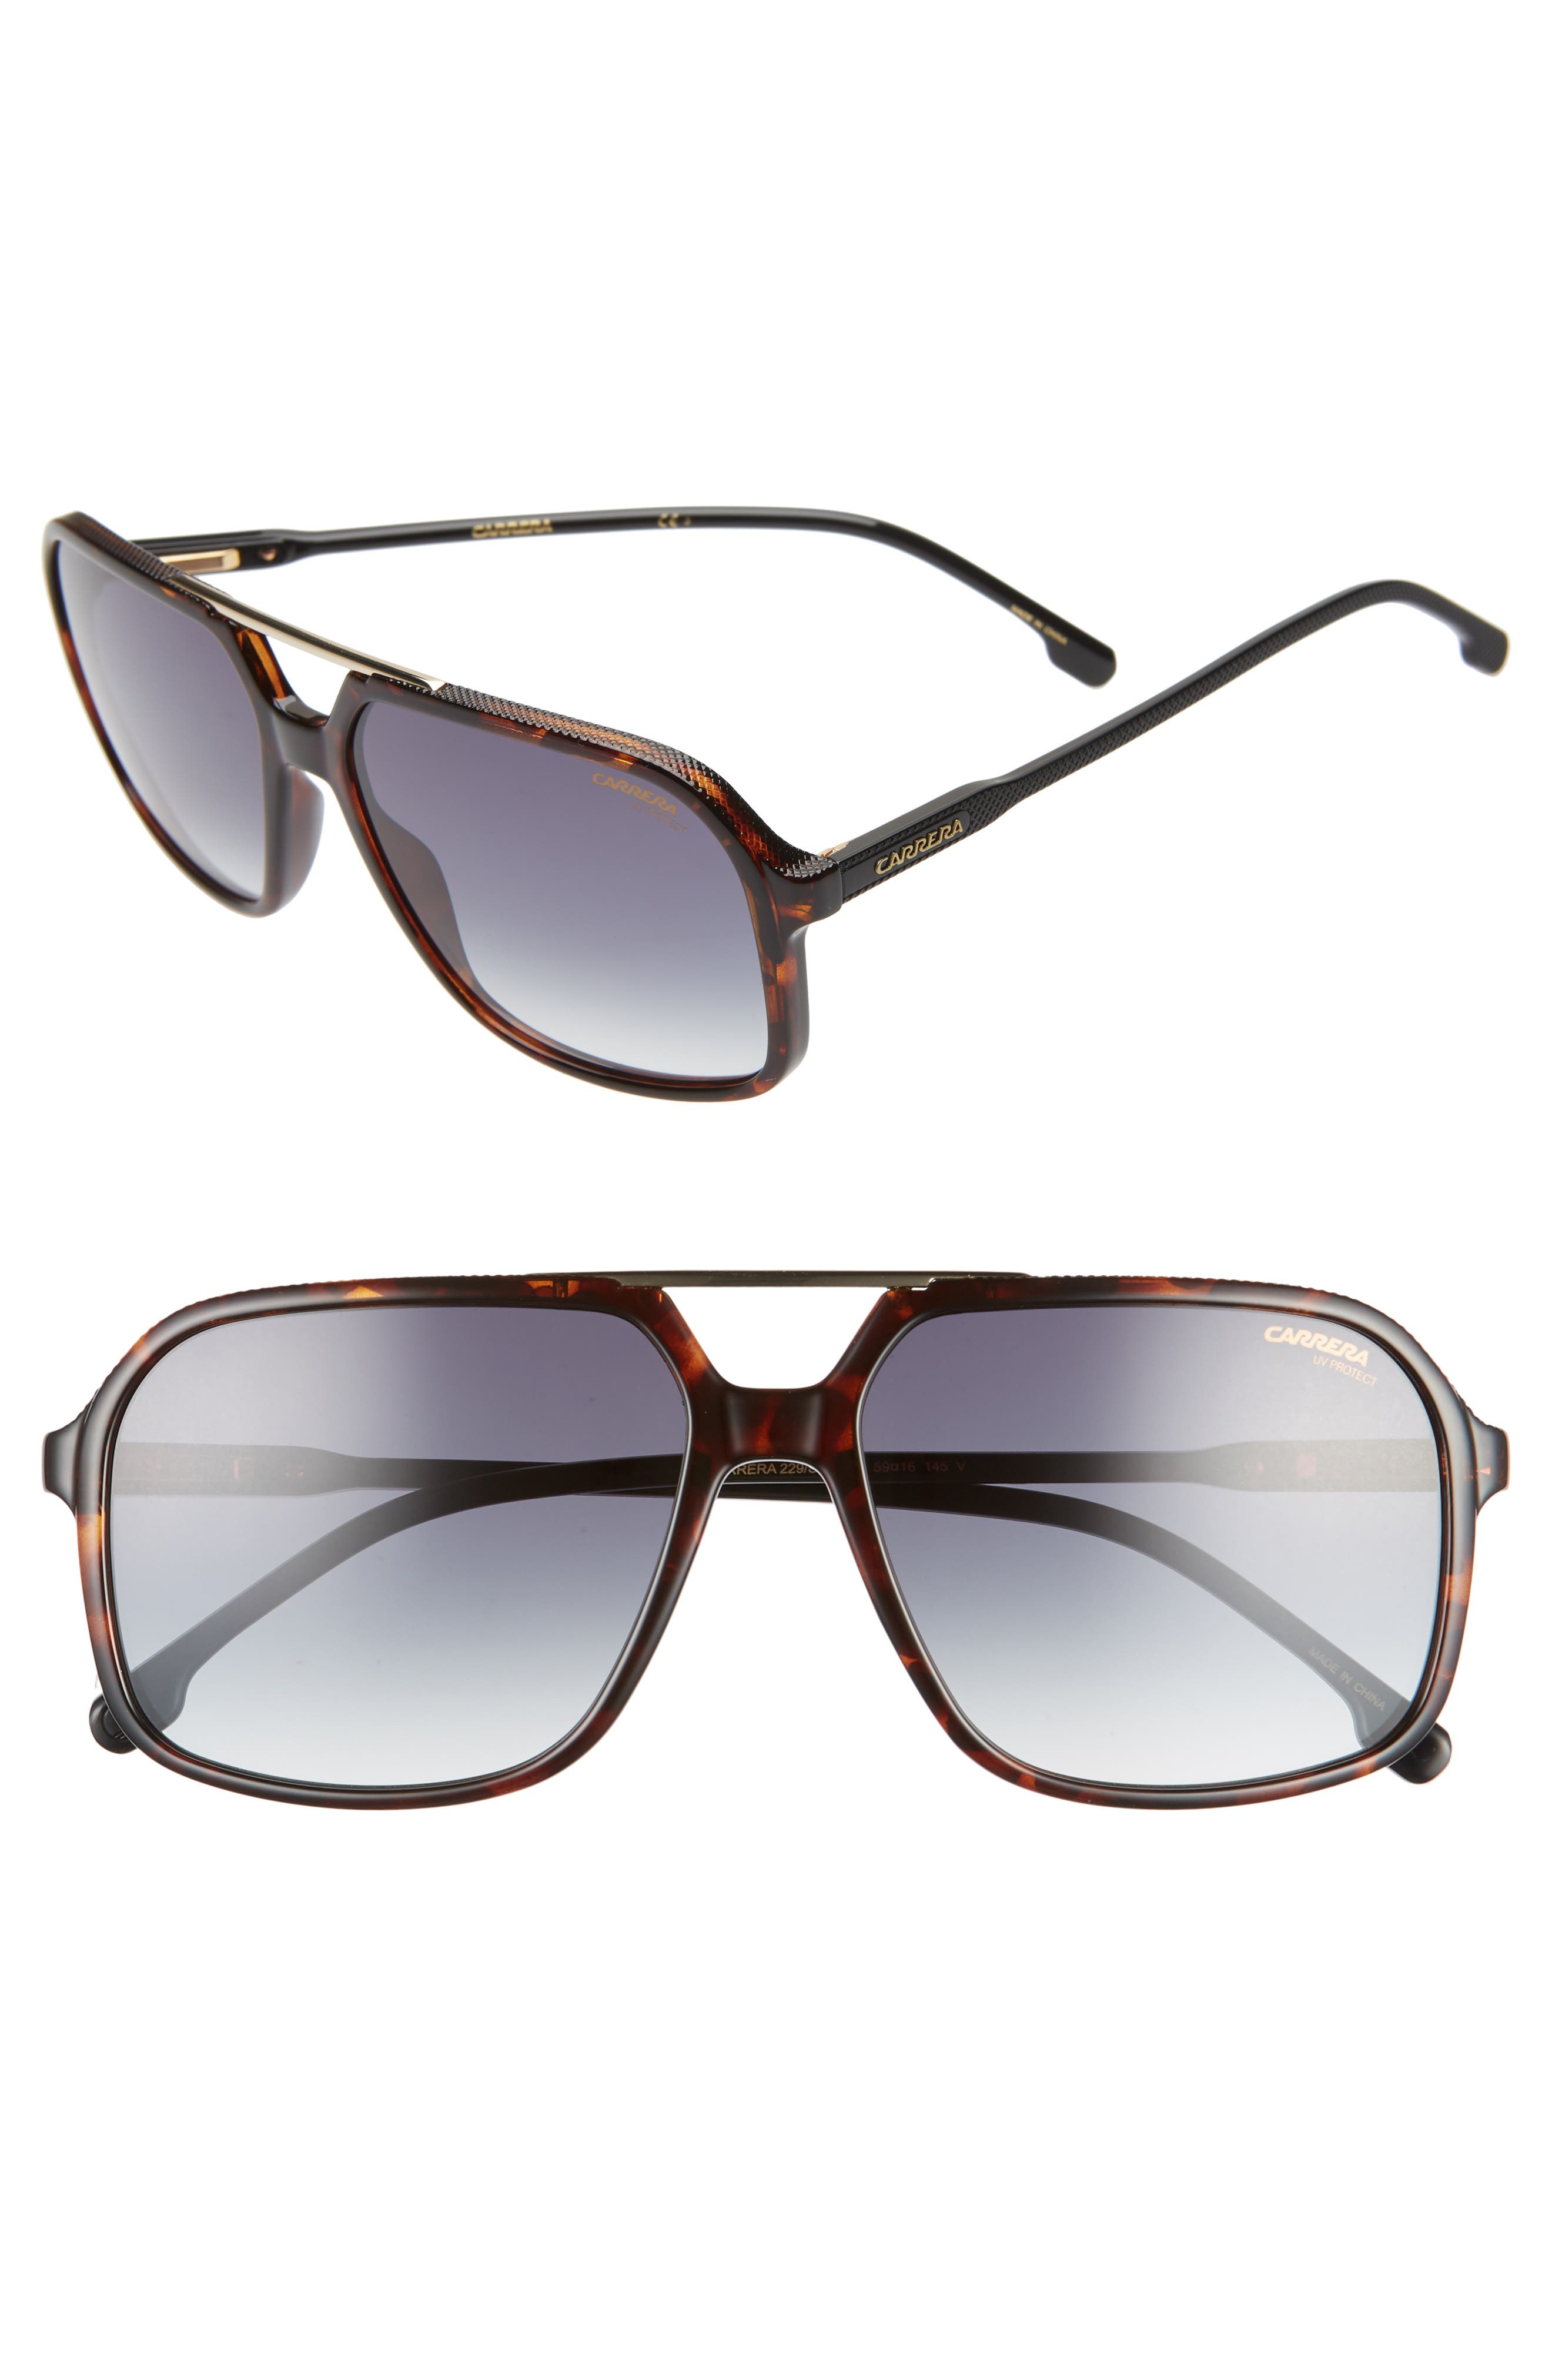 2019 New Brown Tea Fashion Men Womens Pilot Sunglasses Unisex Carrera Glasses